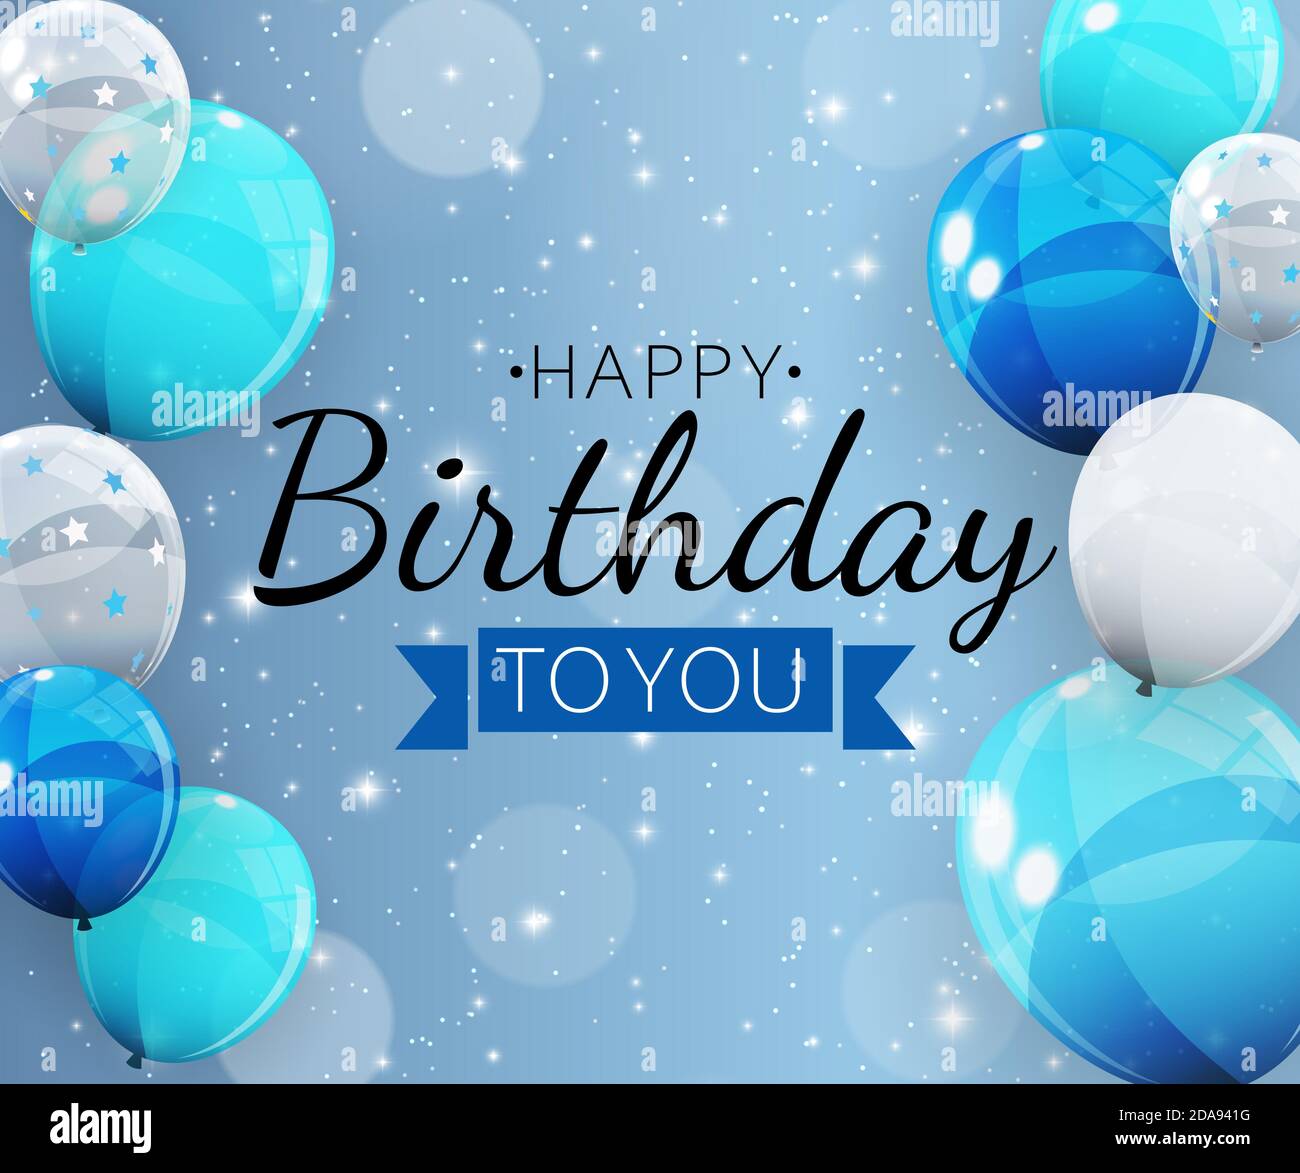 Happy Birthday Background with Balloons. Illustration Stock Photo - Alamy